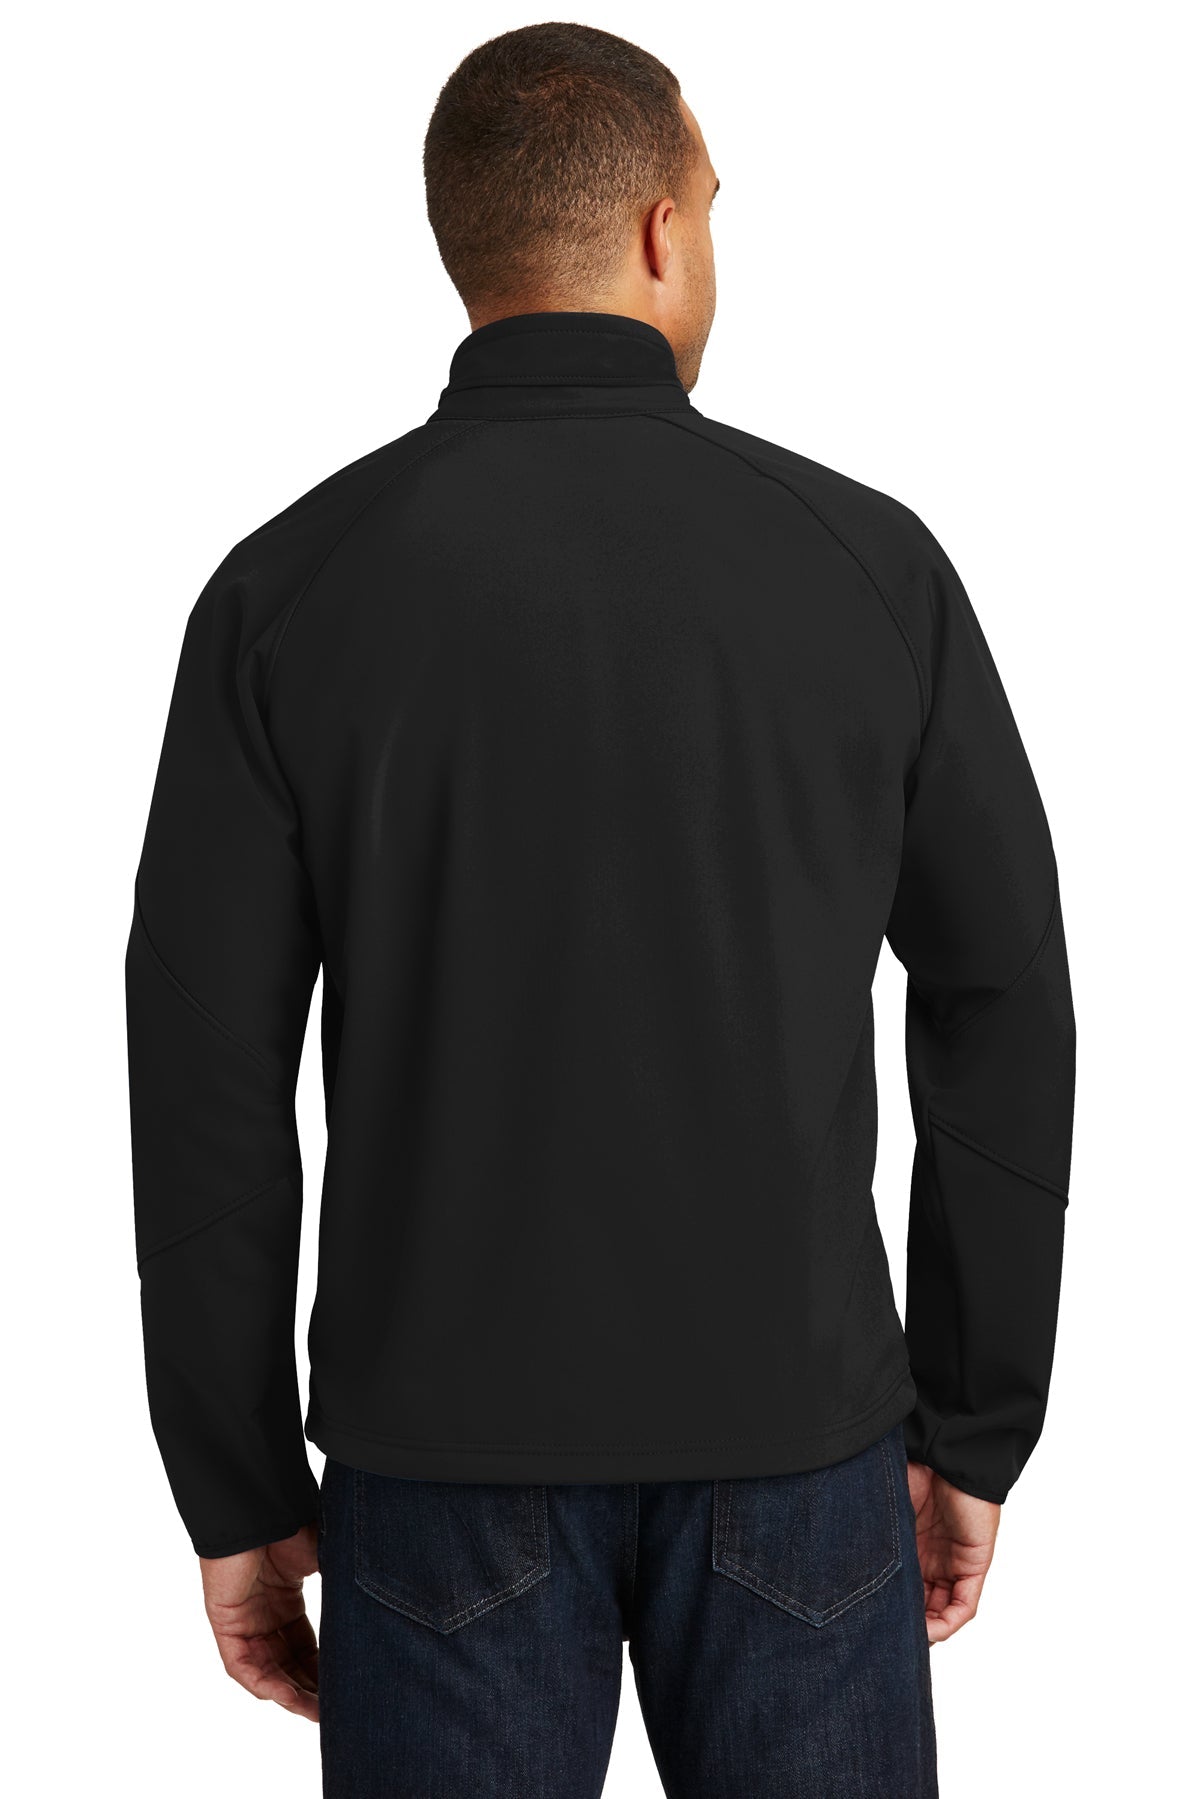 Port Authority Tall Textured Custom Soft Shell Jackets, Black